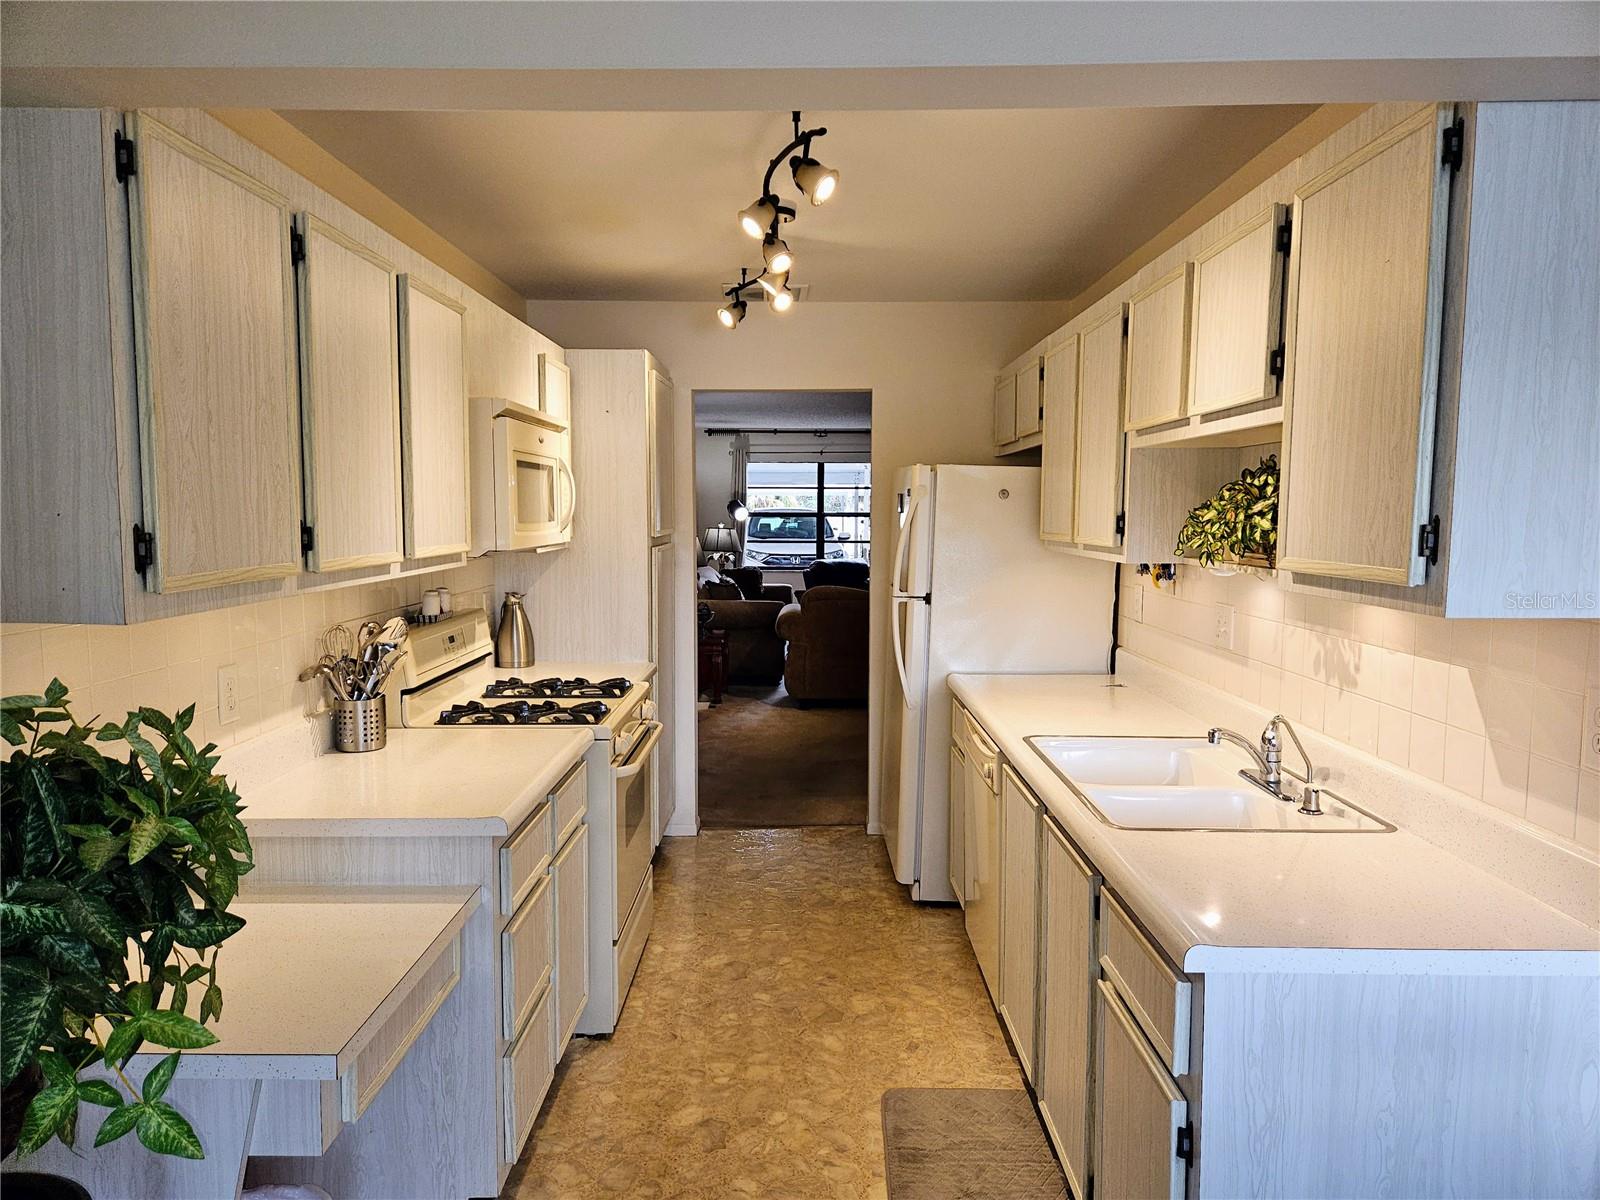 Nice Galley Kitchen Has Convenient Built-in Desk, Microwave, Dishwasher